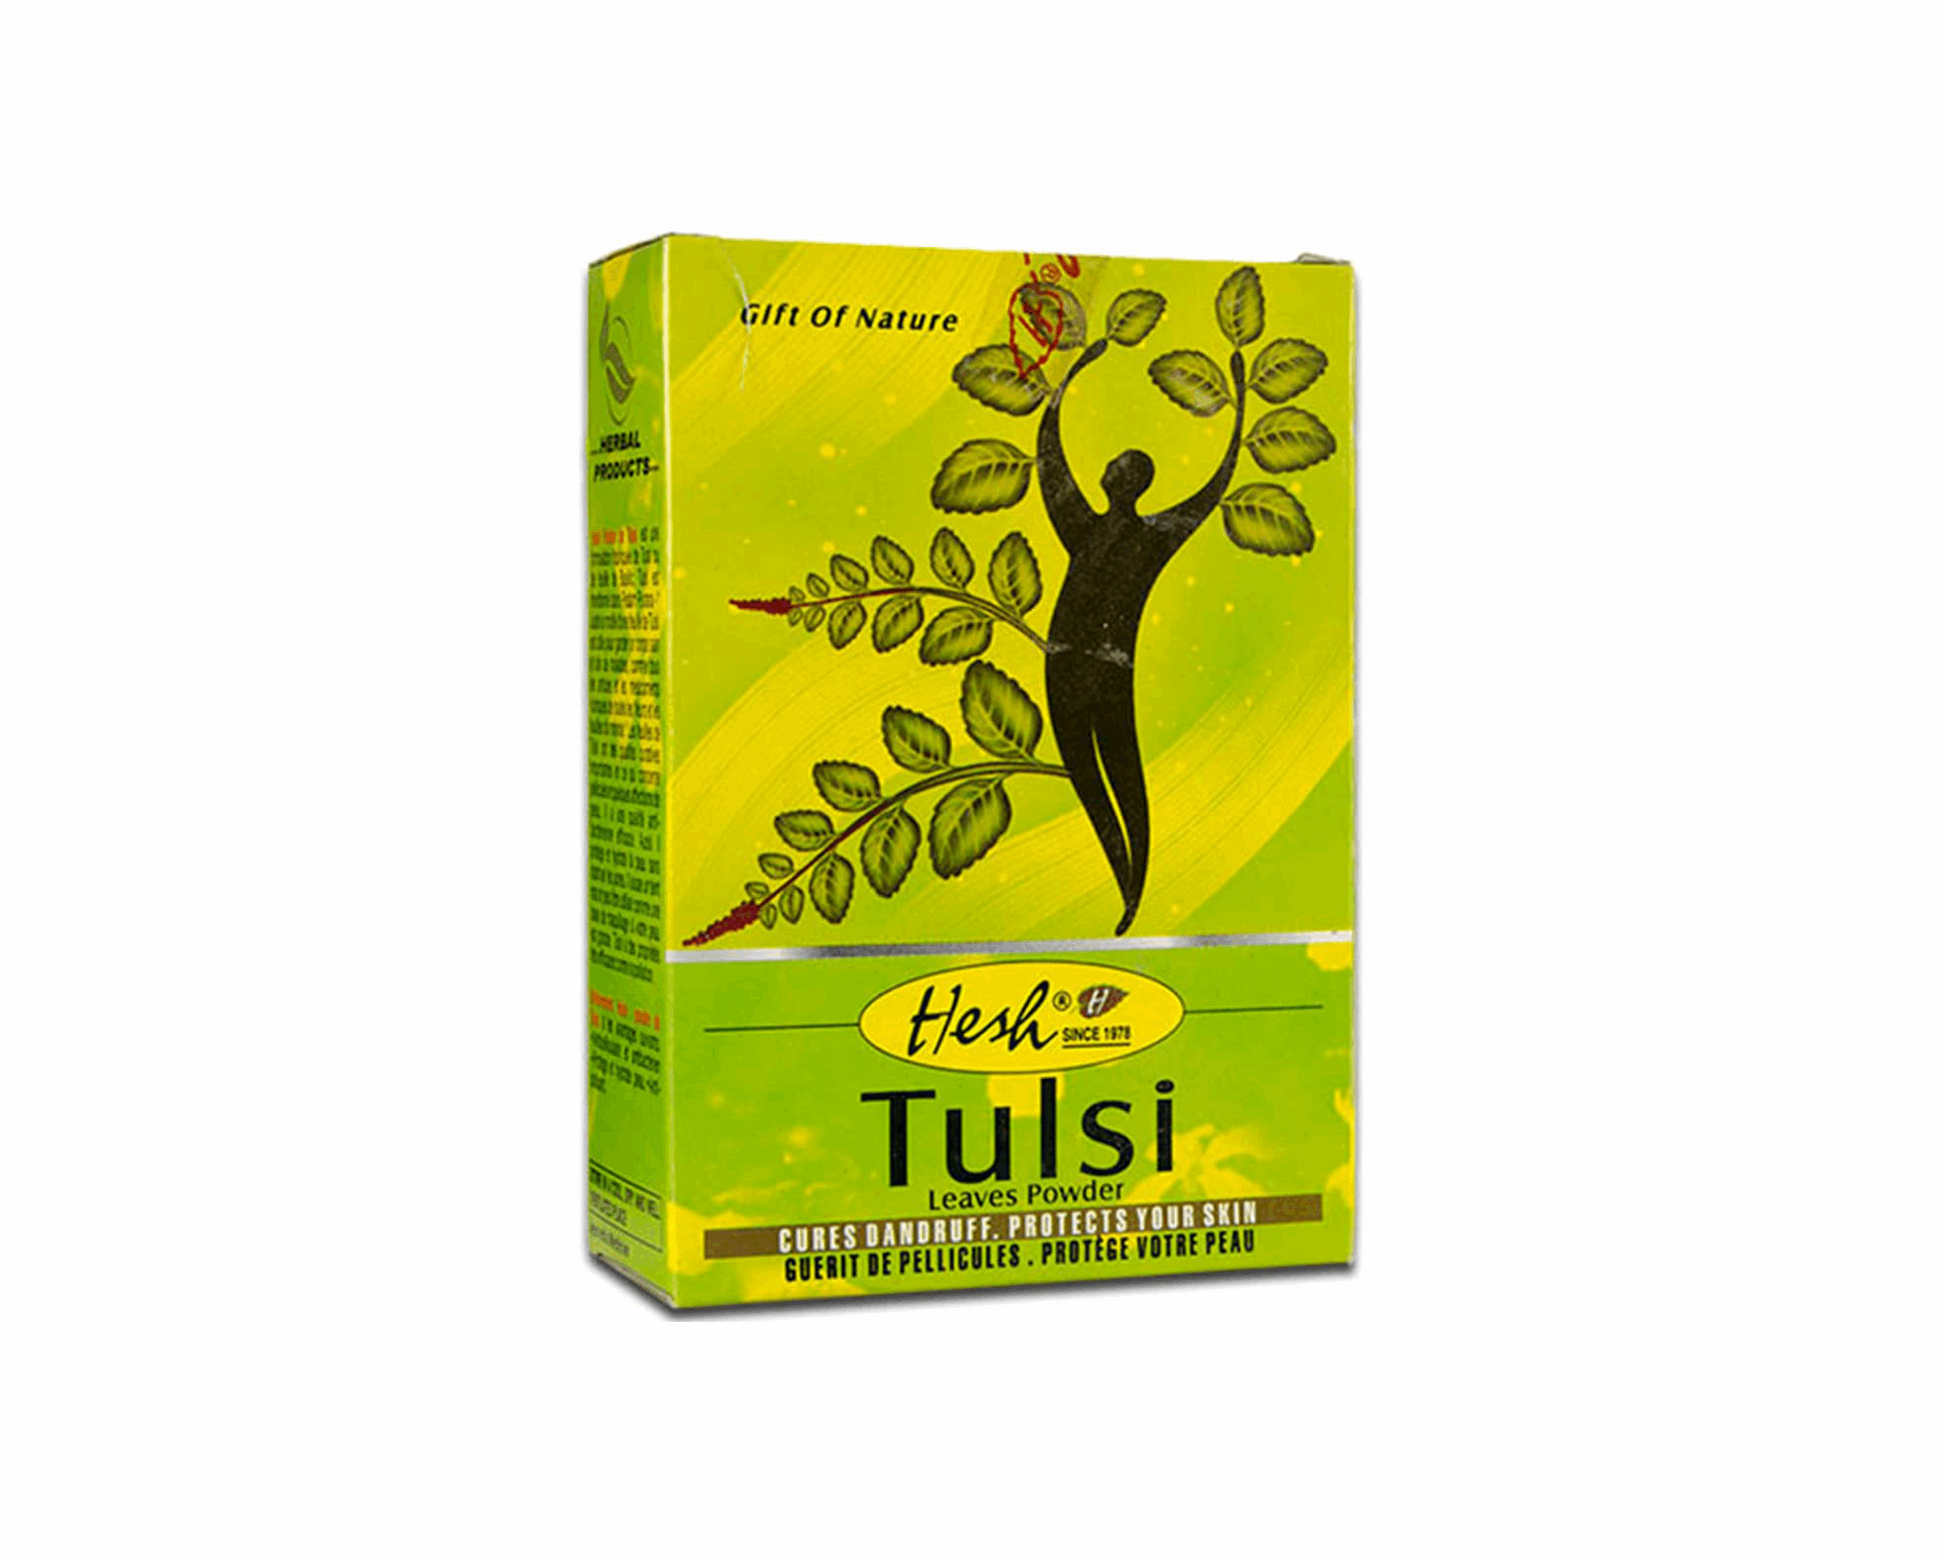 Hesh Herbal Powder 100G - Indian Spices